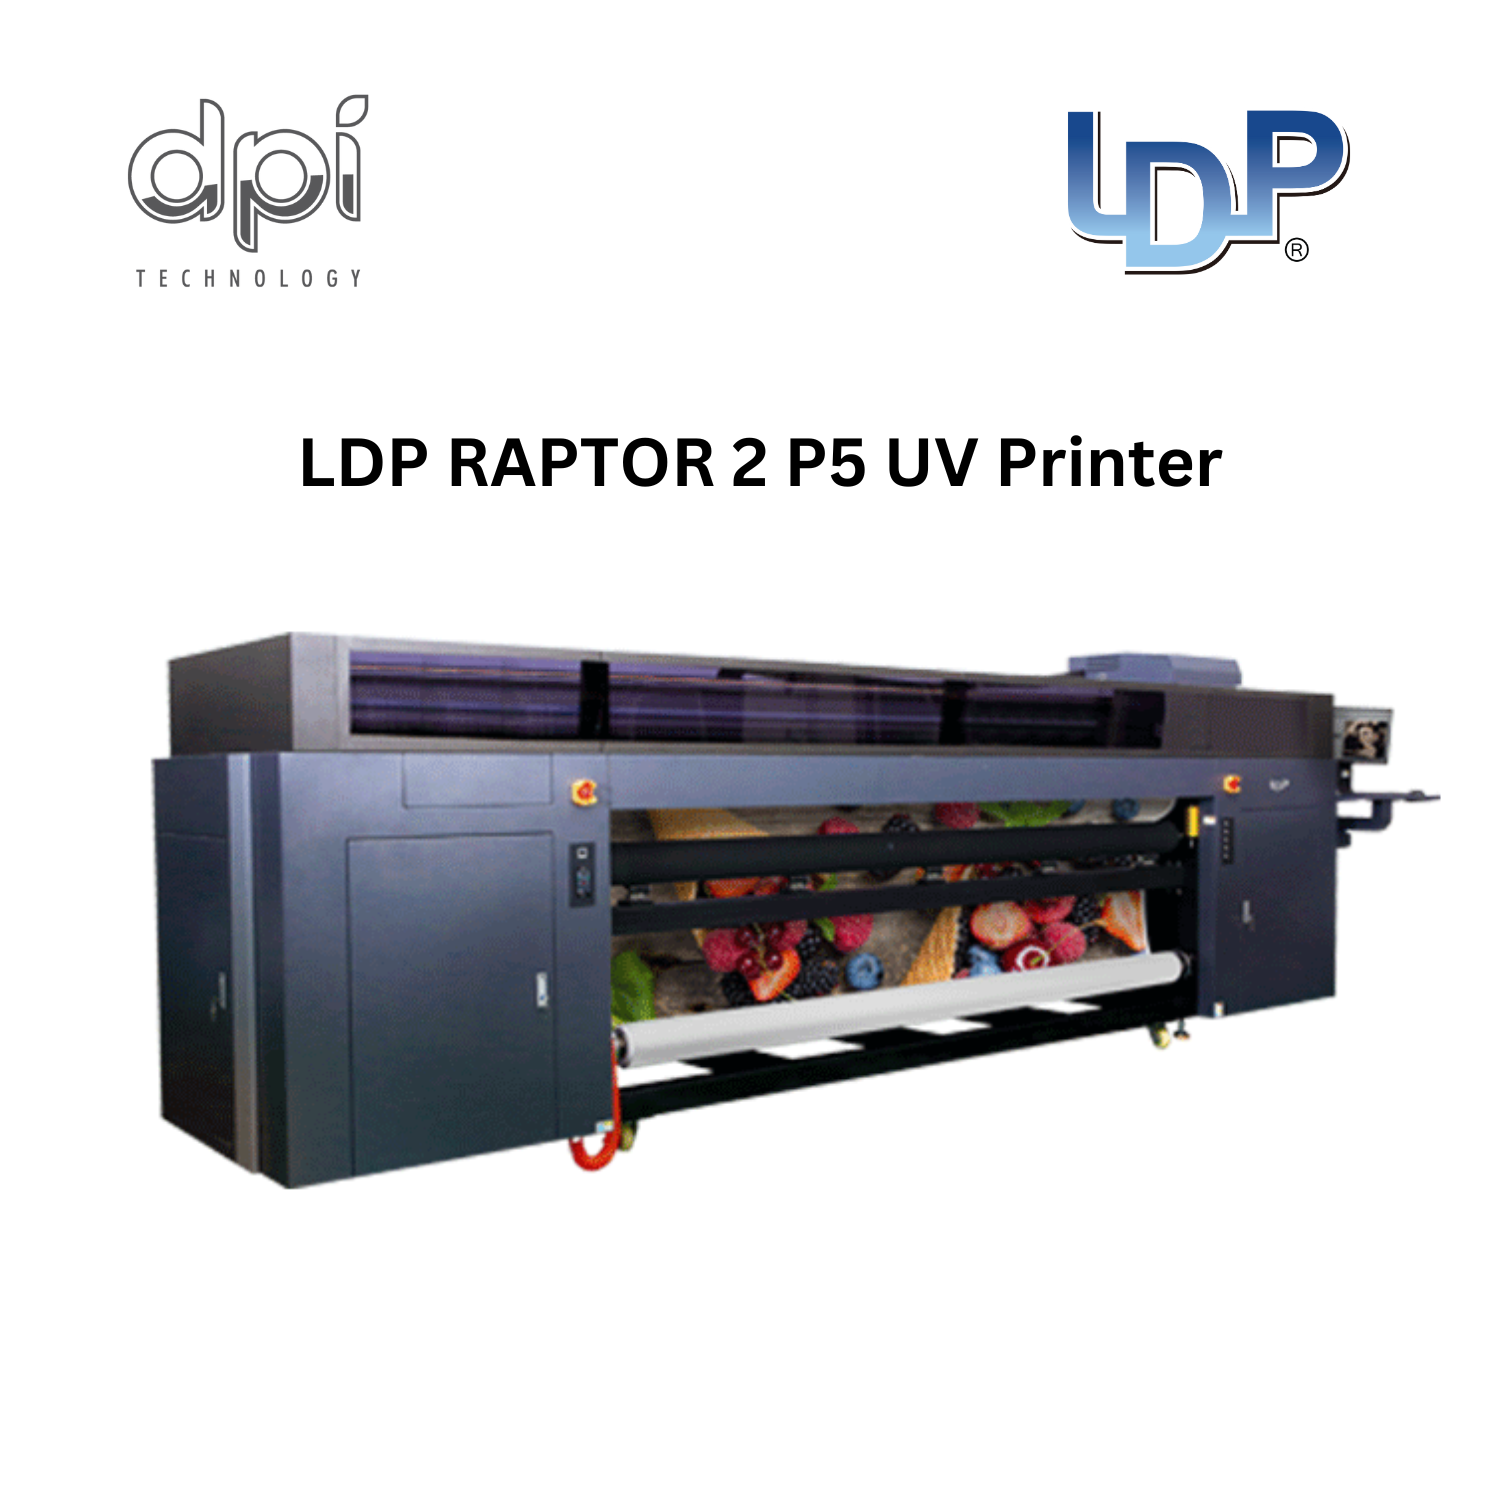 LDP Raptor 2 P5 UV Printer